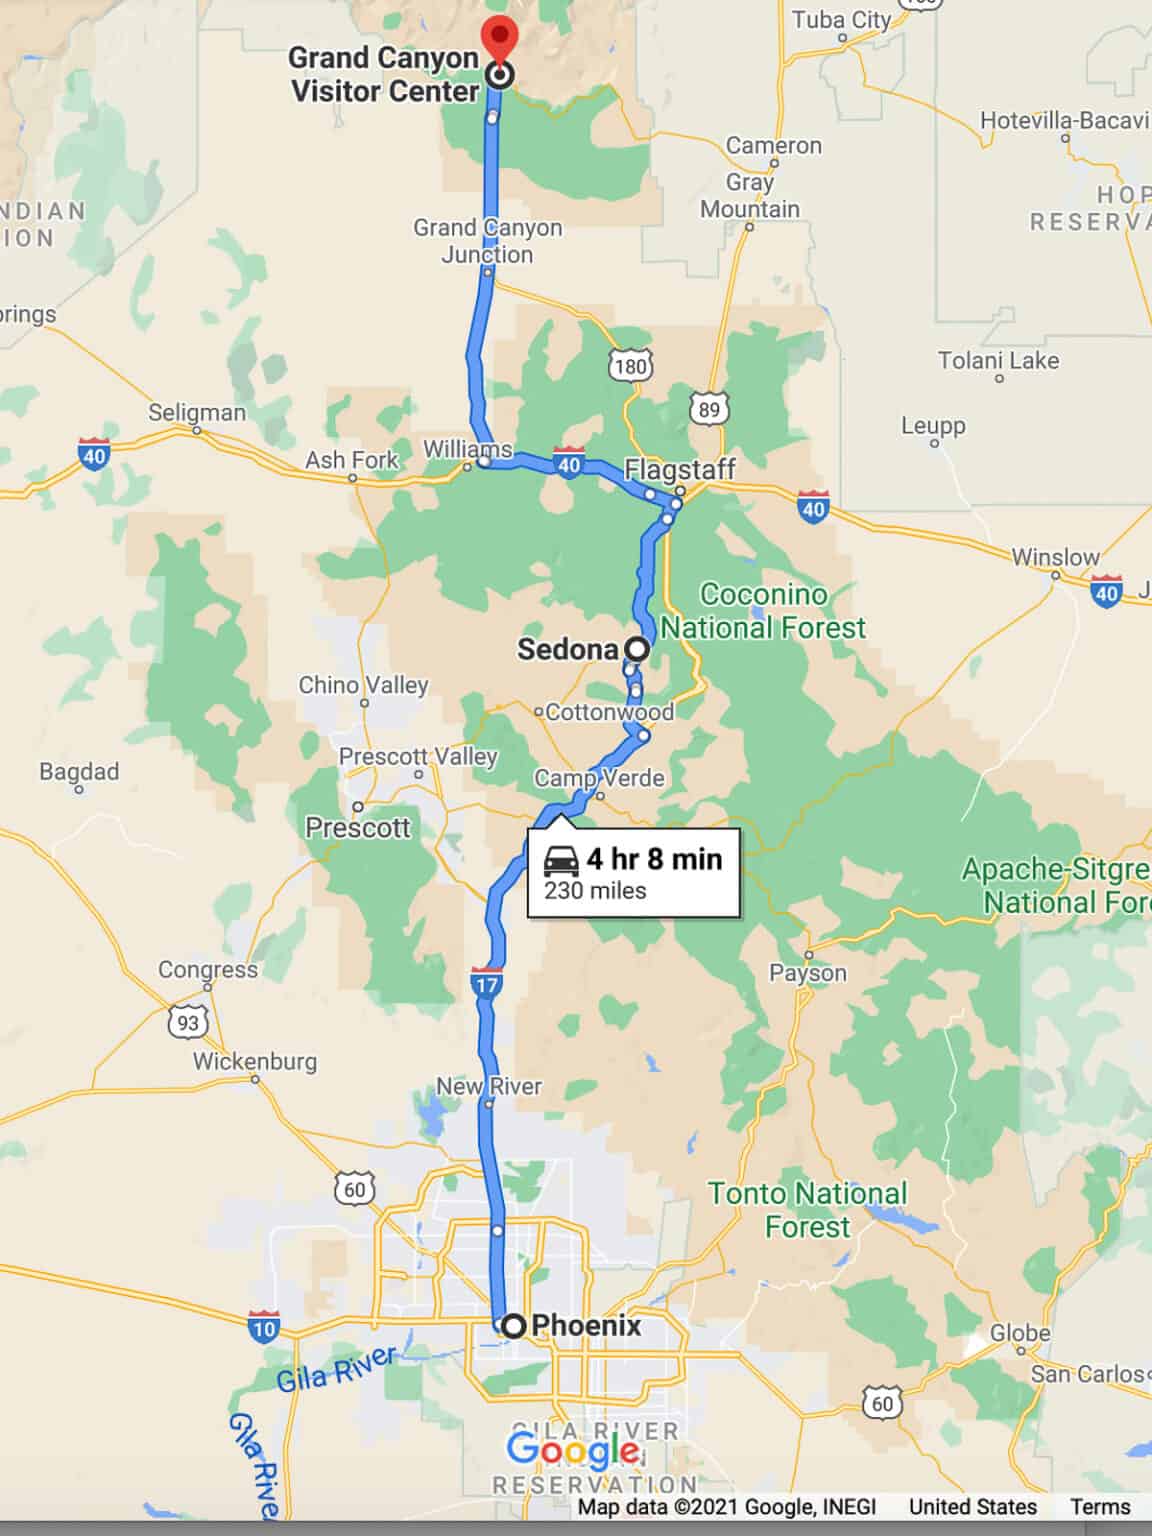 An Epic Arizona Family Road Trip: Scottsdale, Sedona, the Grand Canyon